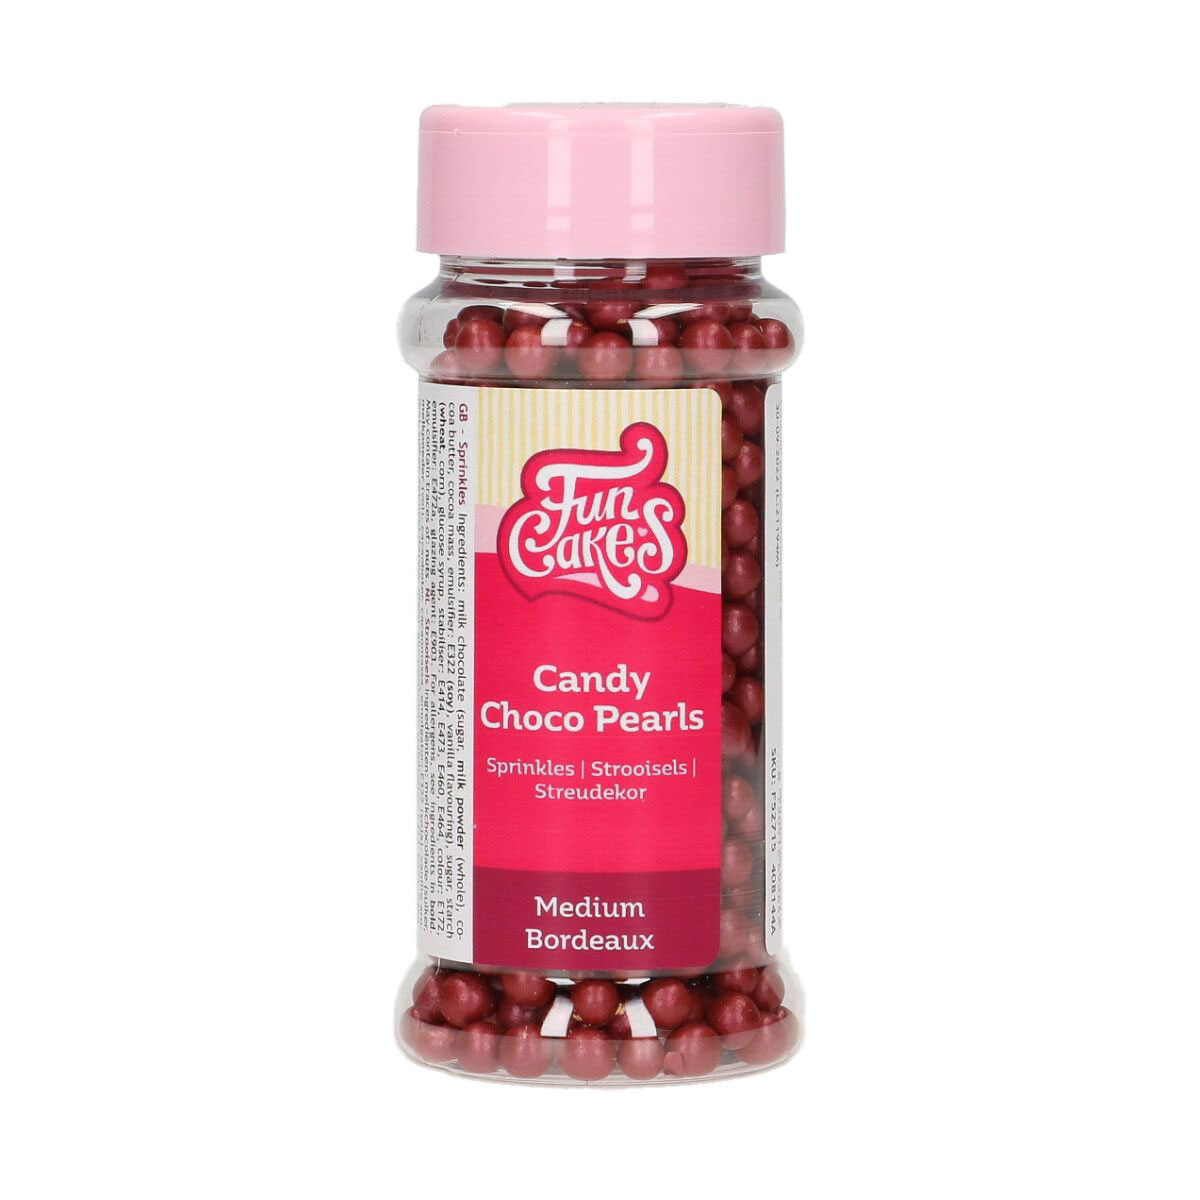 FunCakes Candy Choco Pearls Medium Bordeaux 80g